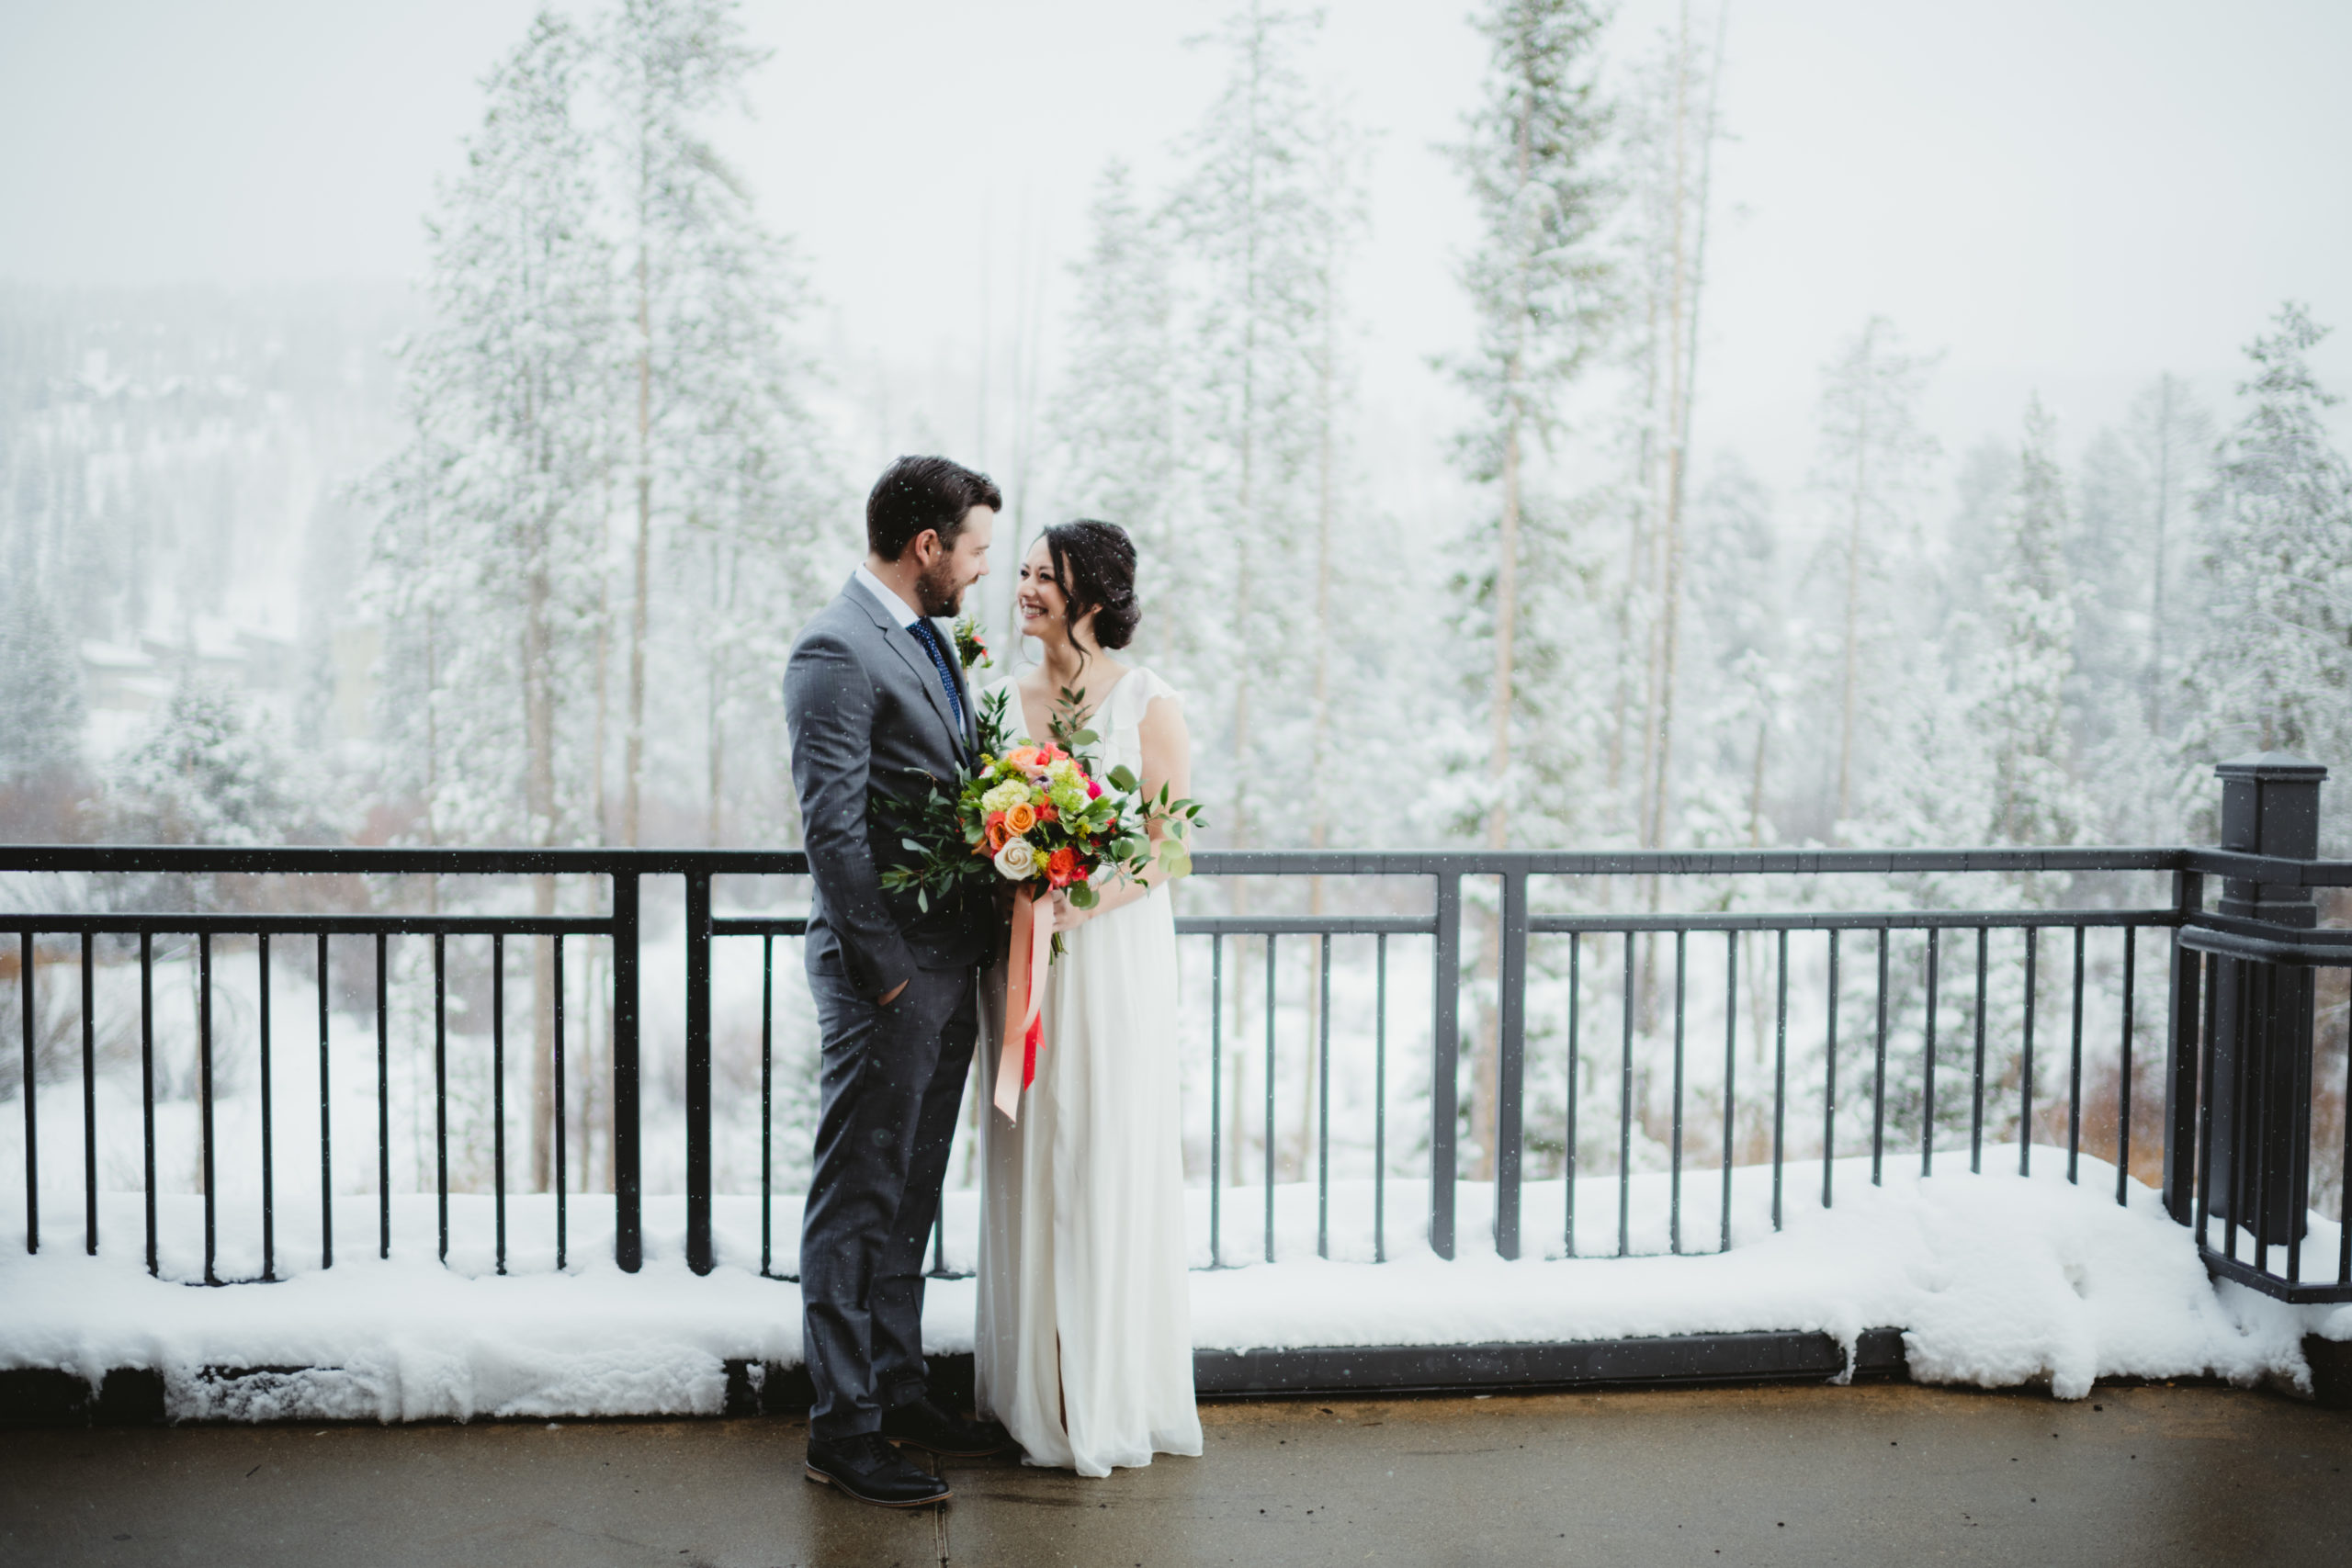 Outdoor Colorado Mountain Wedding Venue